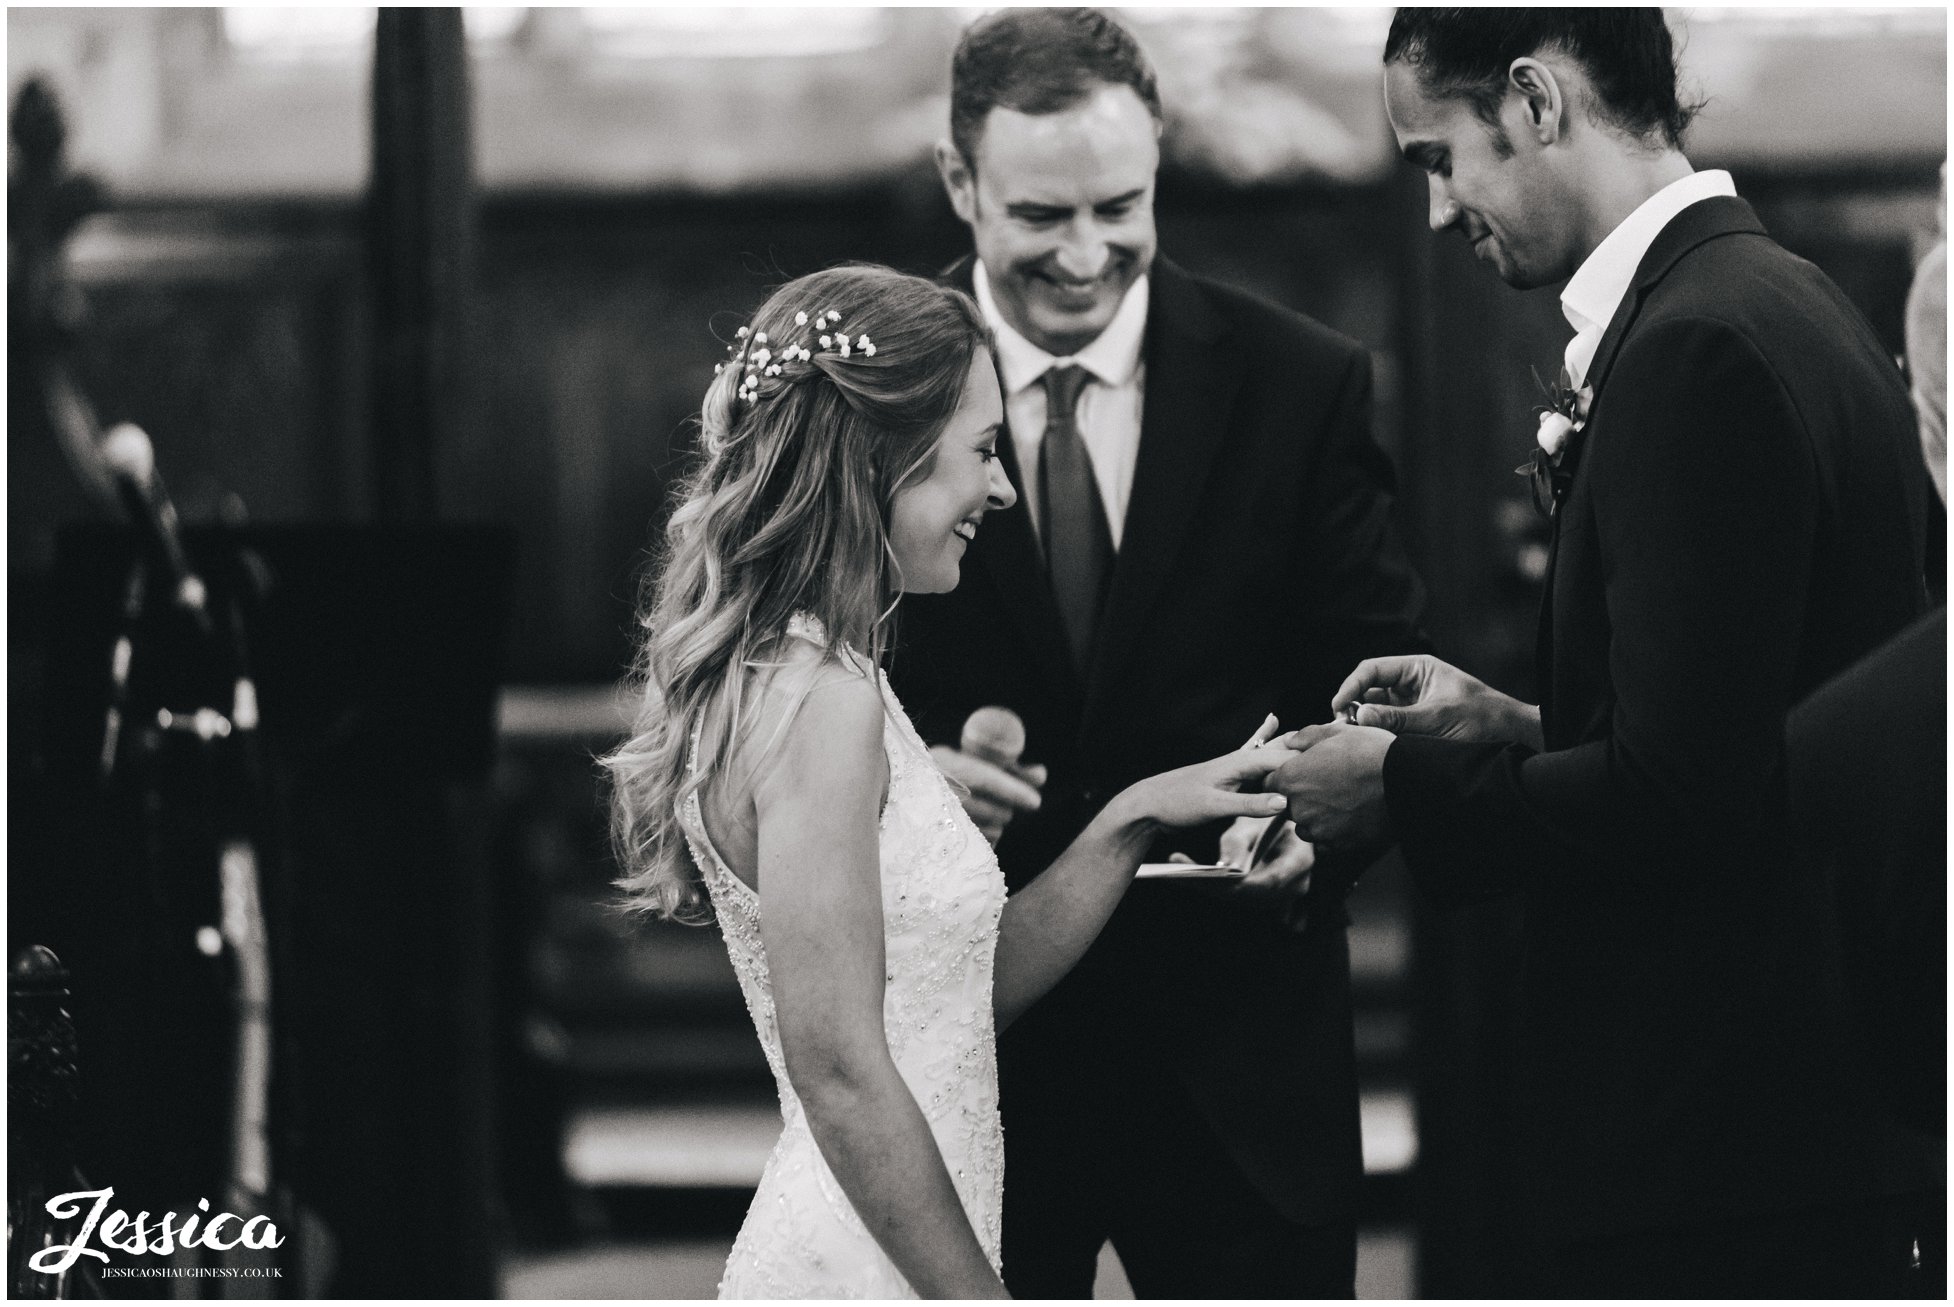 cheadle wedding photography - the couple exchange rings